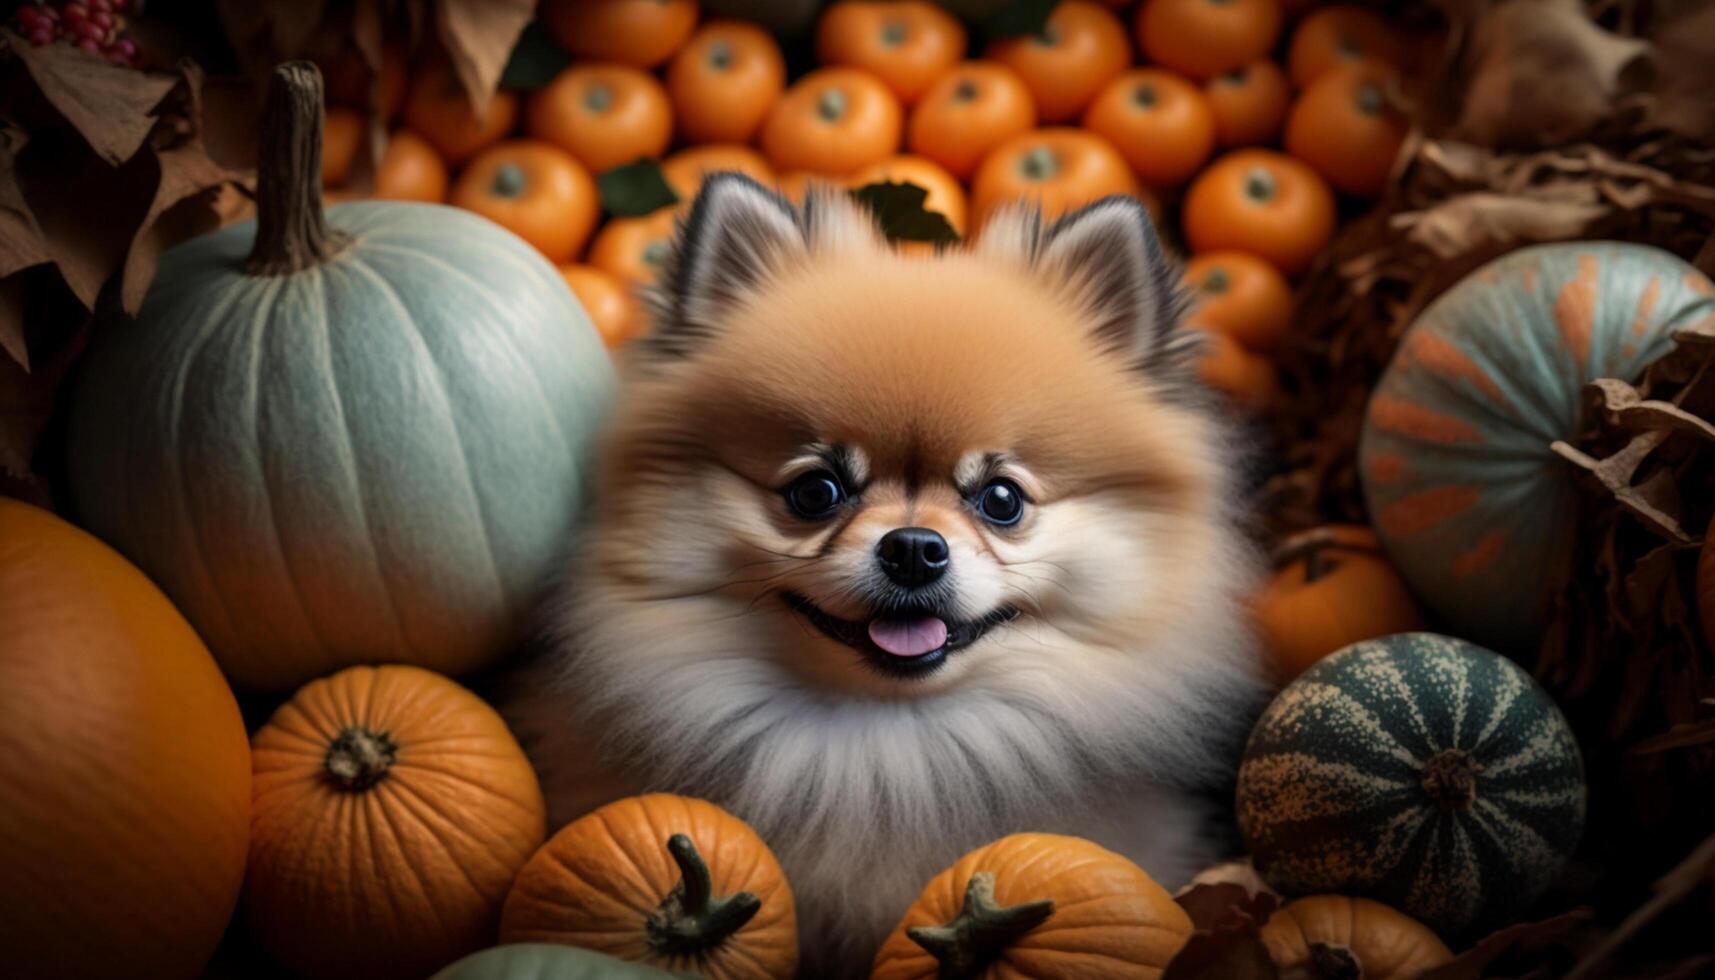 Autumn Celebration Adorable Pomeranian Dog Among Pumpkins and Harvest Decorations photo